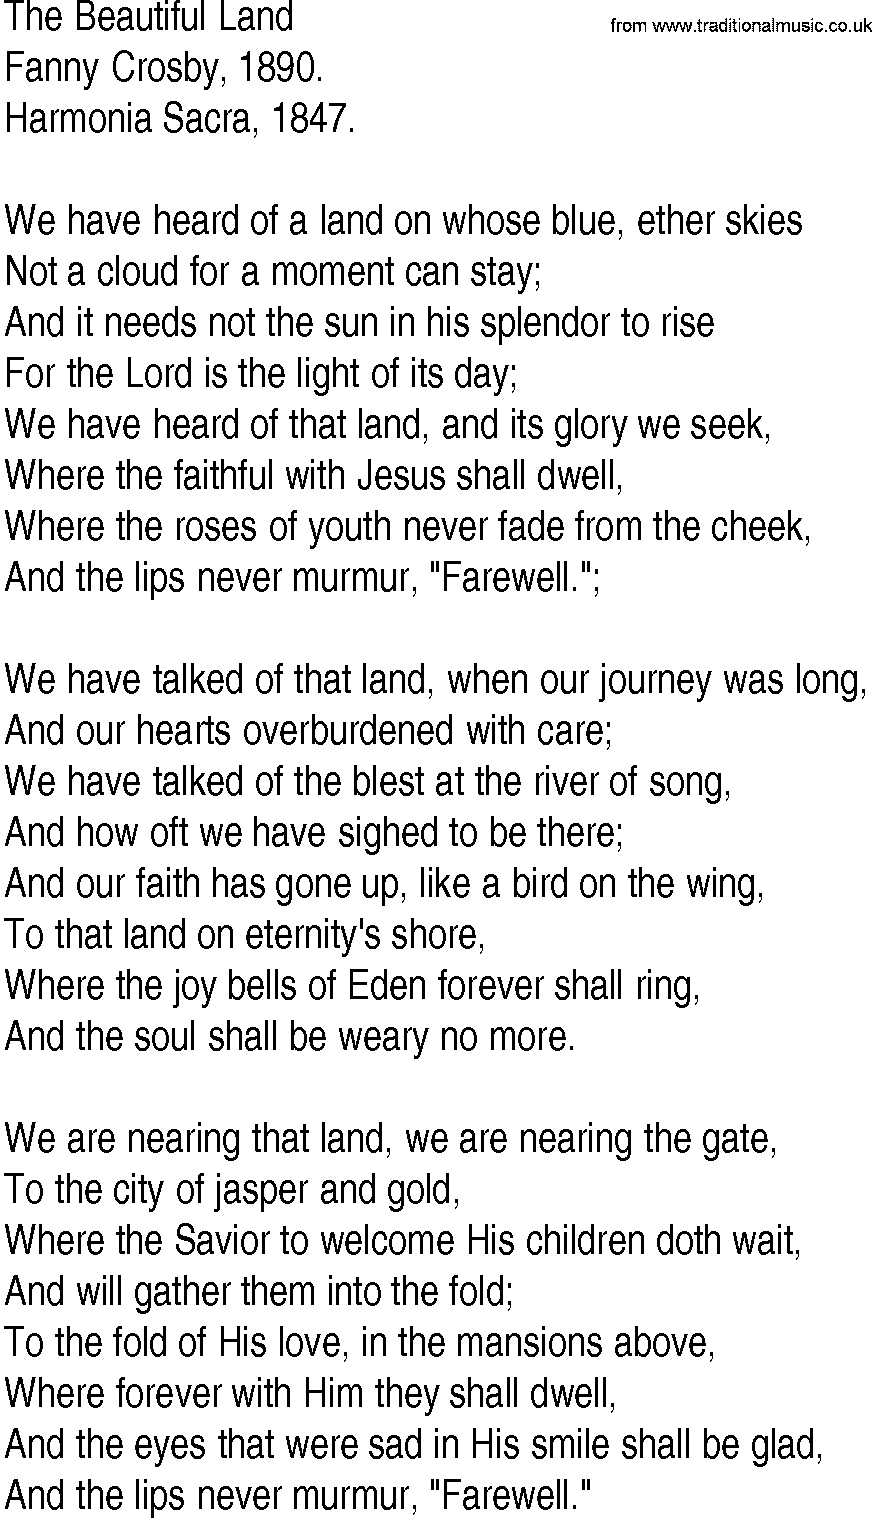 Hymn and Gospel Song: The Beautiful Land by Fanny Crosby lyrics